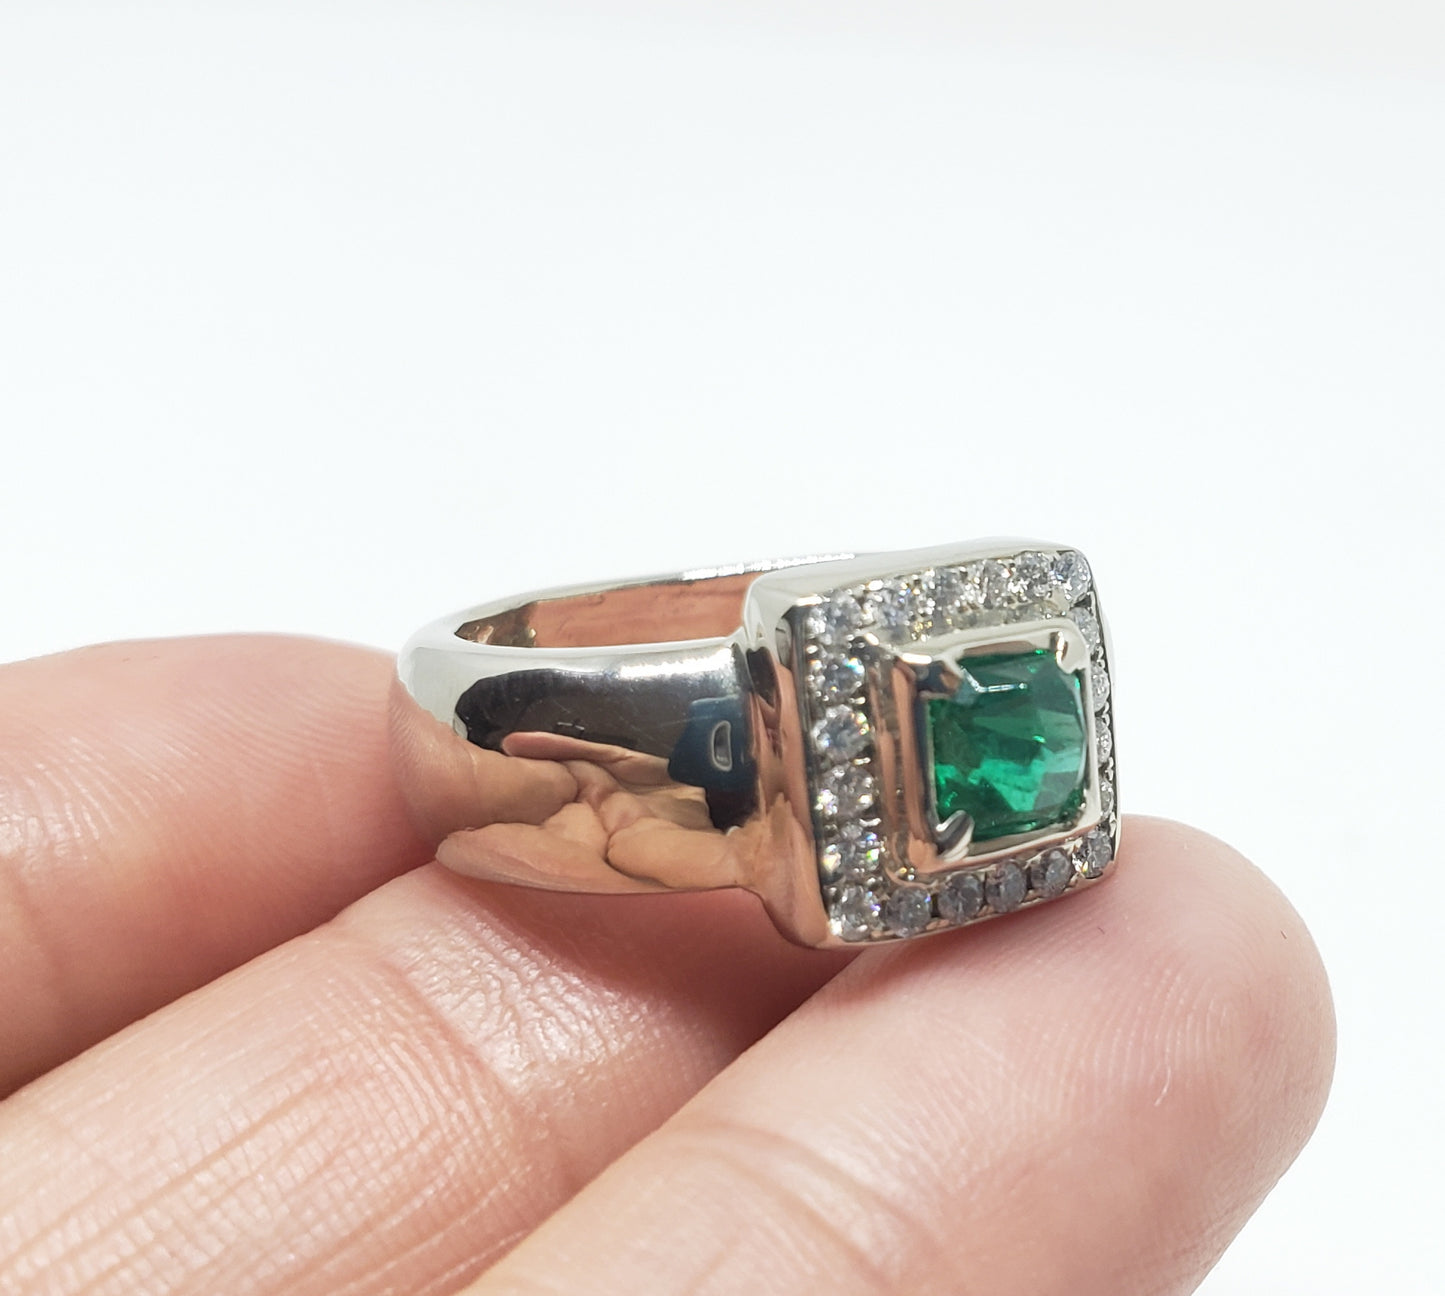 Emerald & Diamond Ring 14 White Gold -  Size 7